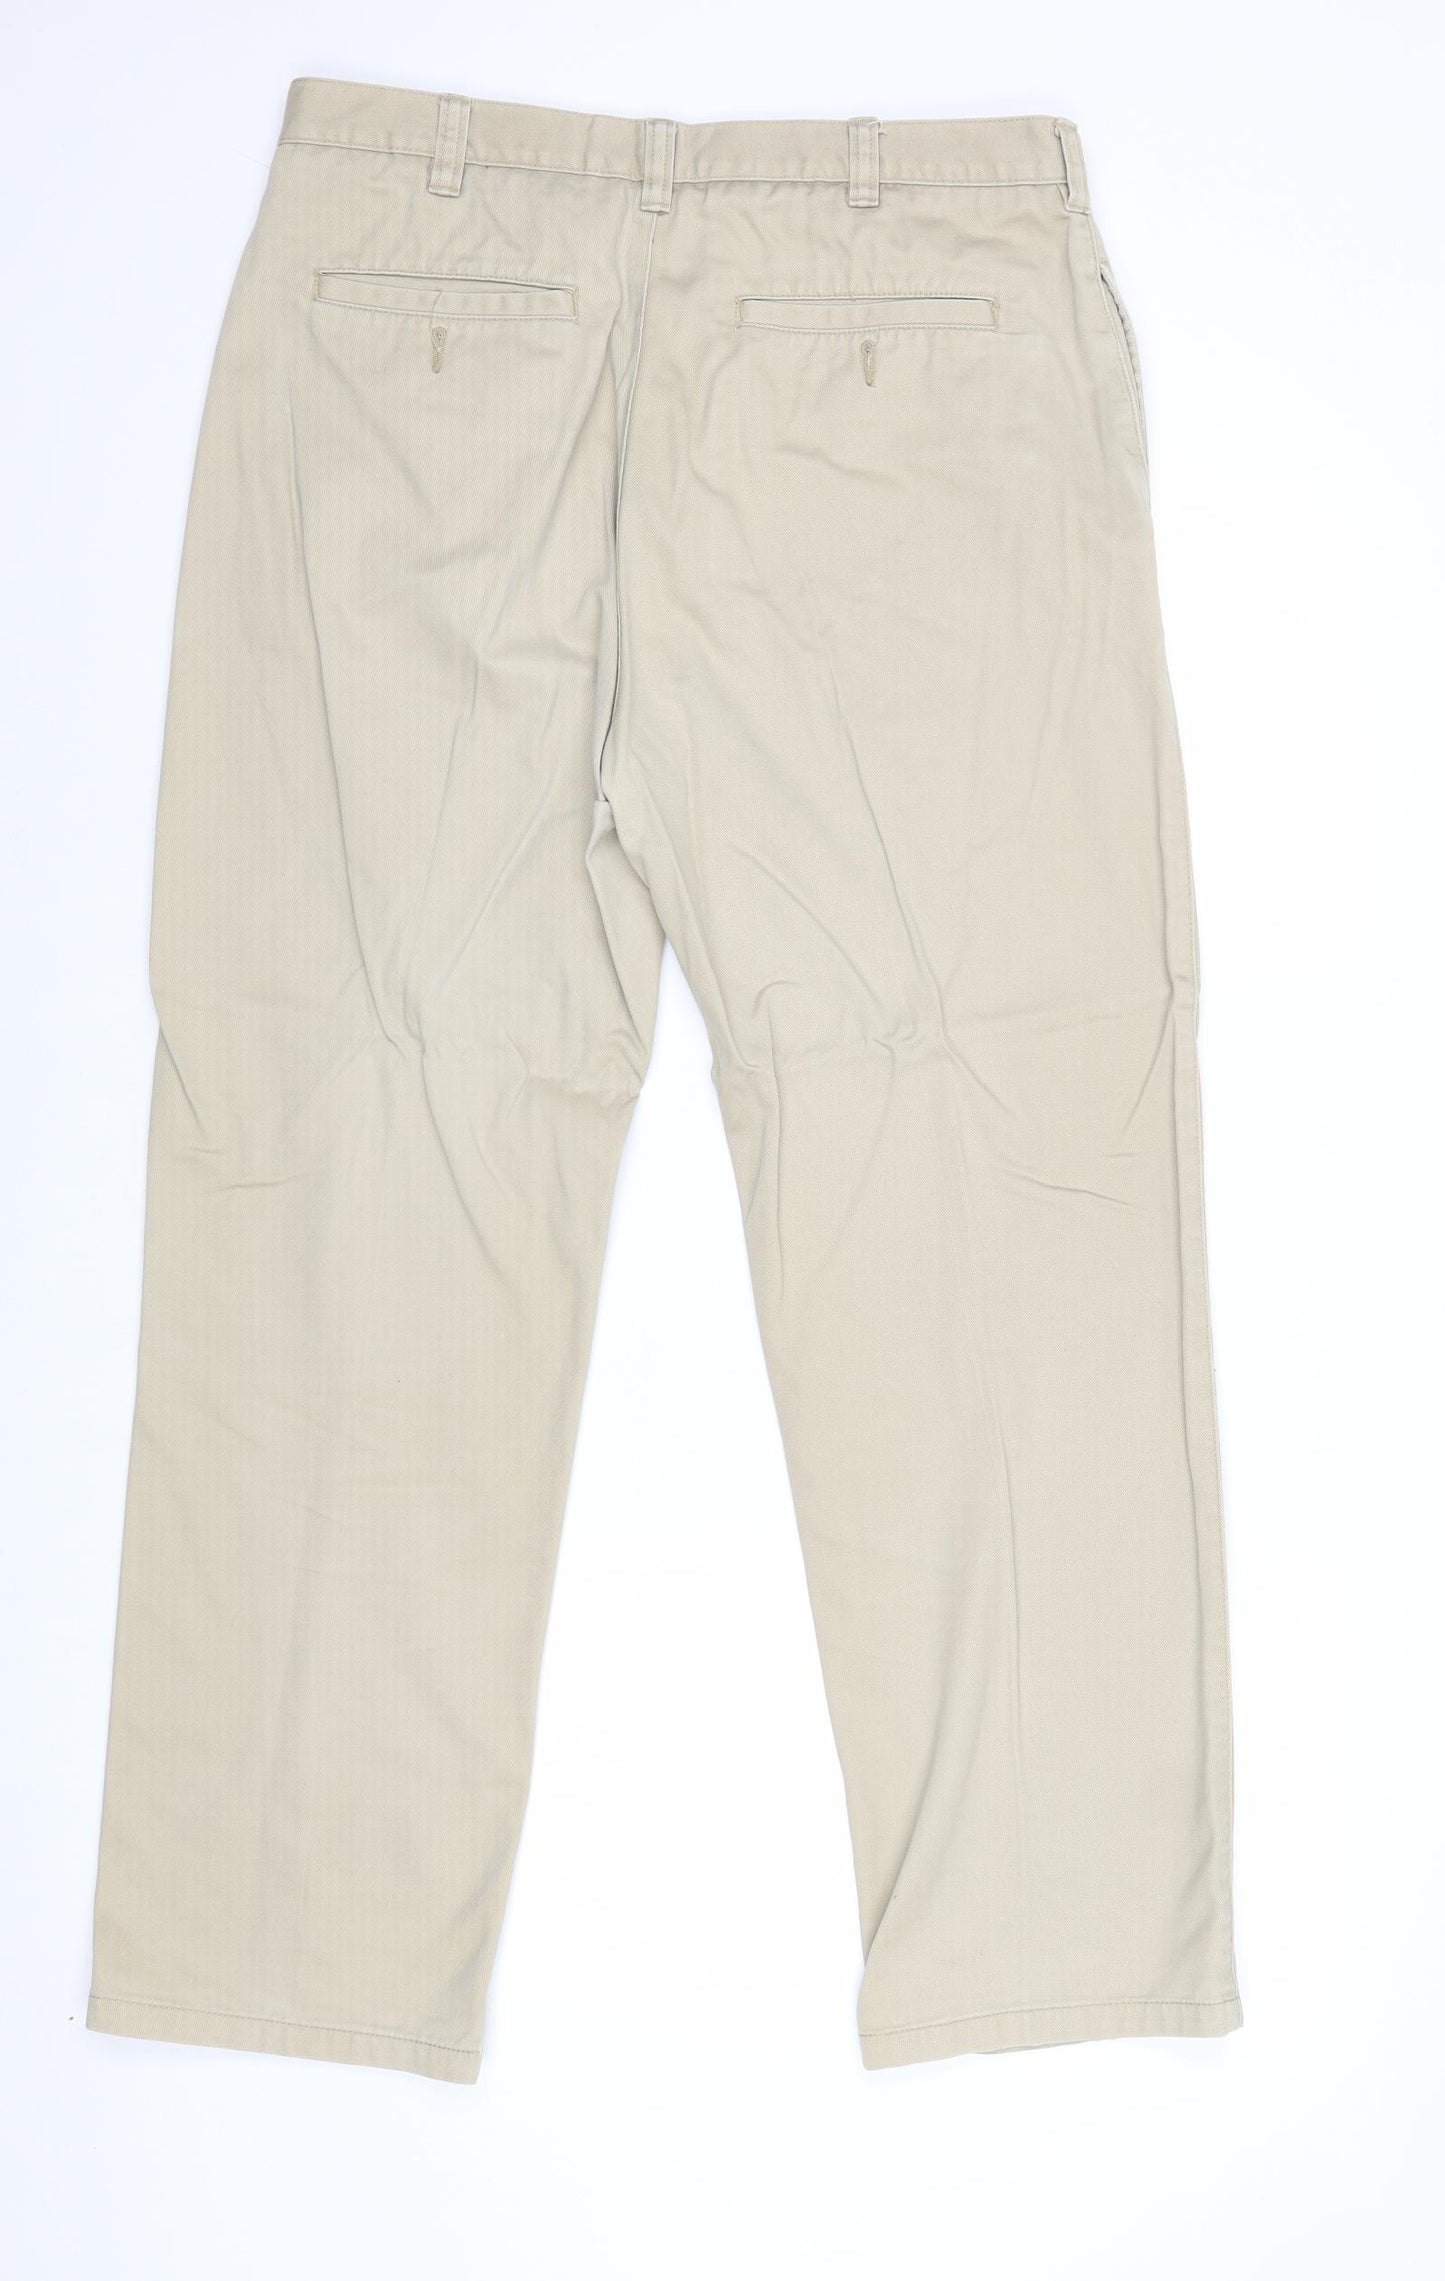 Armando Mens Beige Cotton Trousers Size 34 in Regular Zip